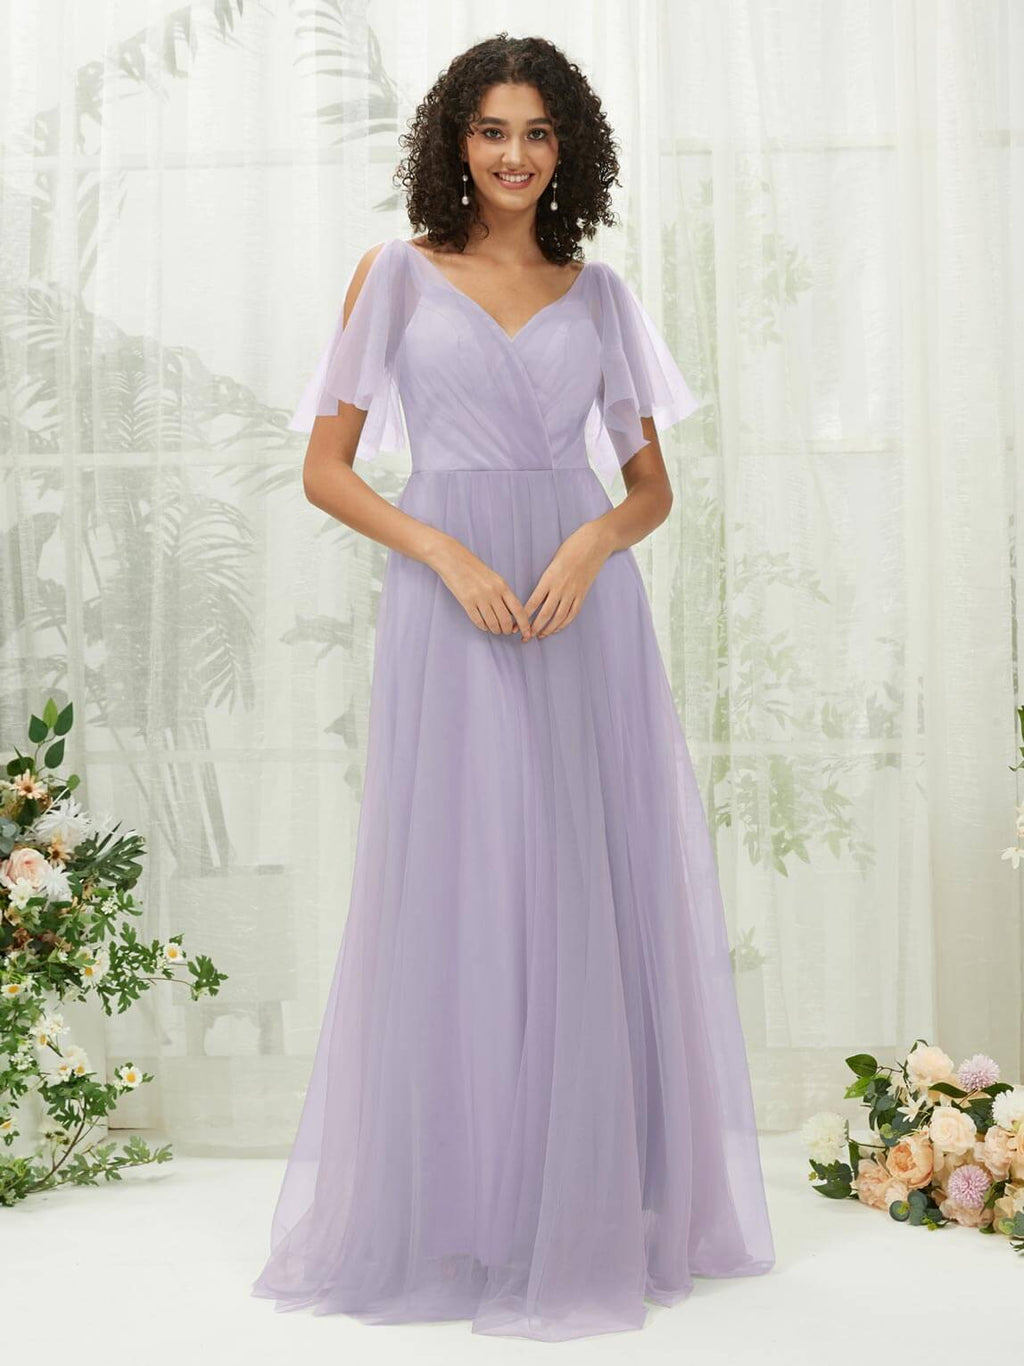 NZ Bridal Light Dusty Purple Tulle Ruffle Sleeves bridesmaid dresses R1027 Dallas a